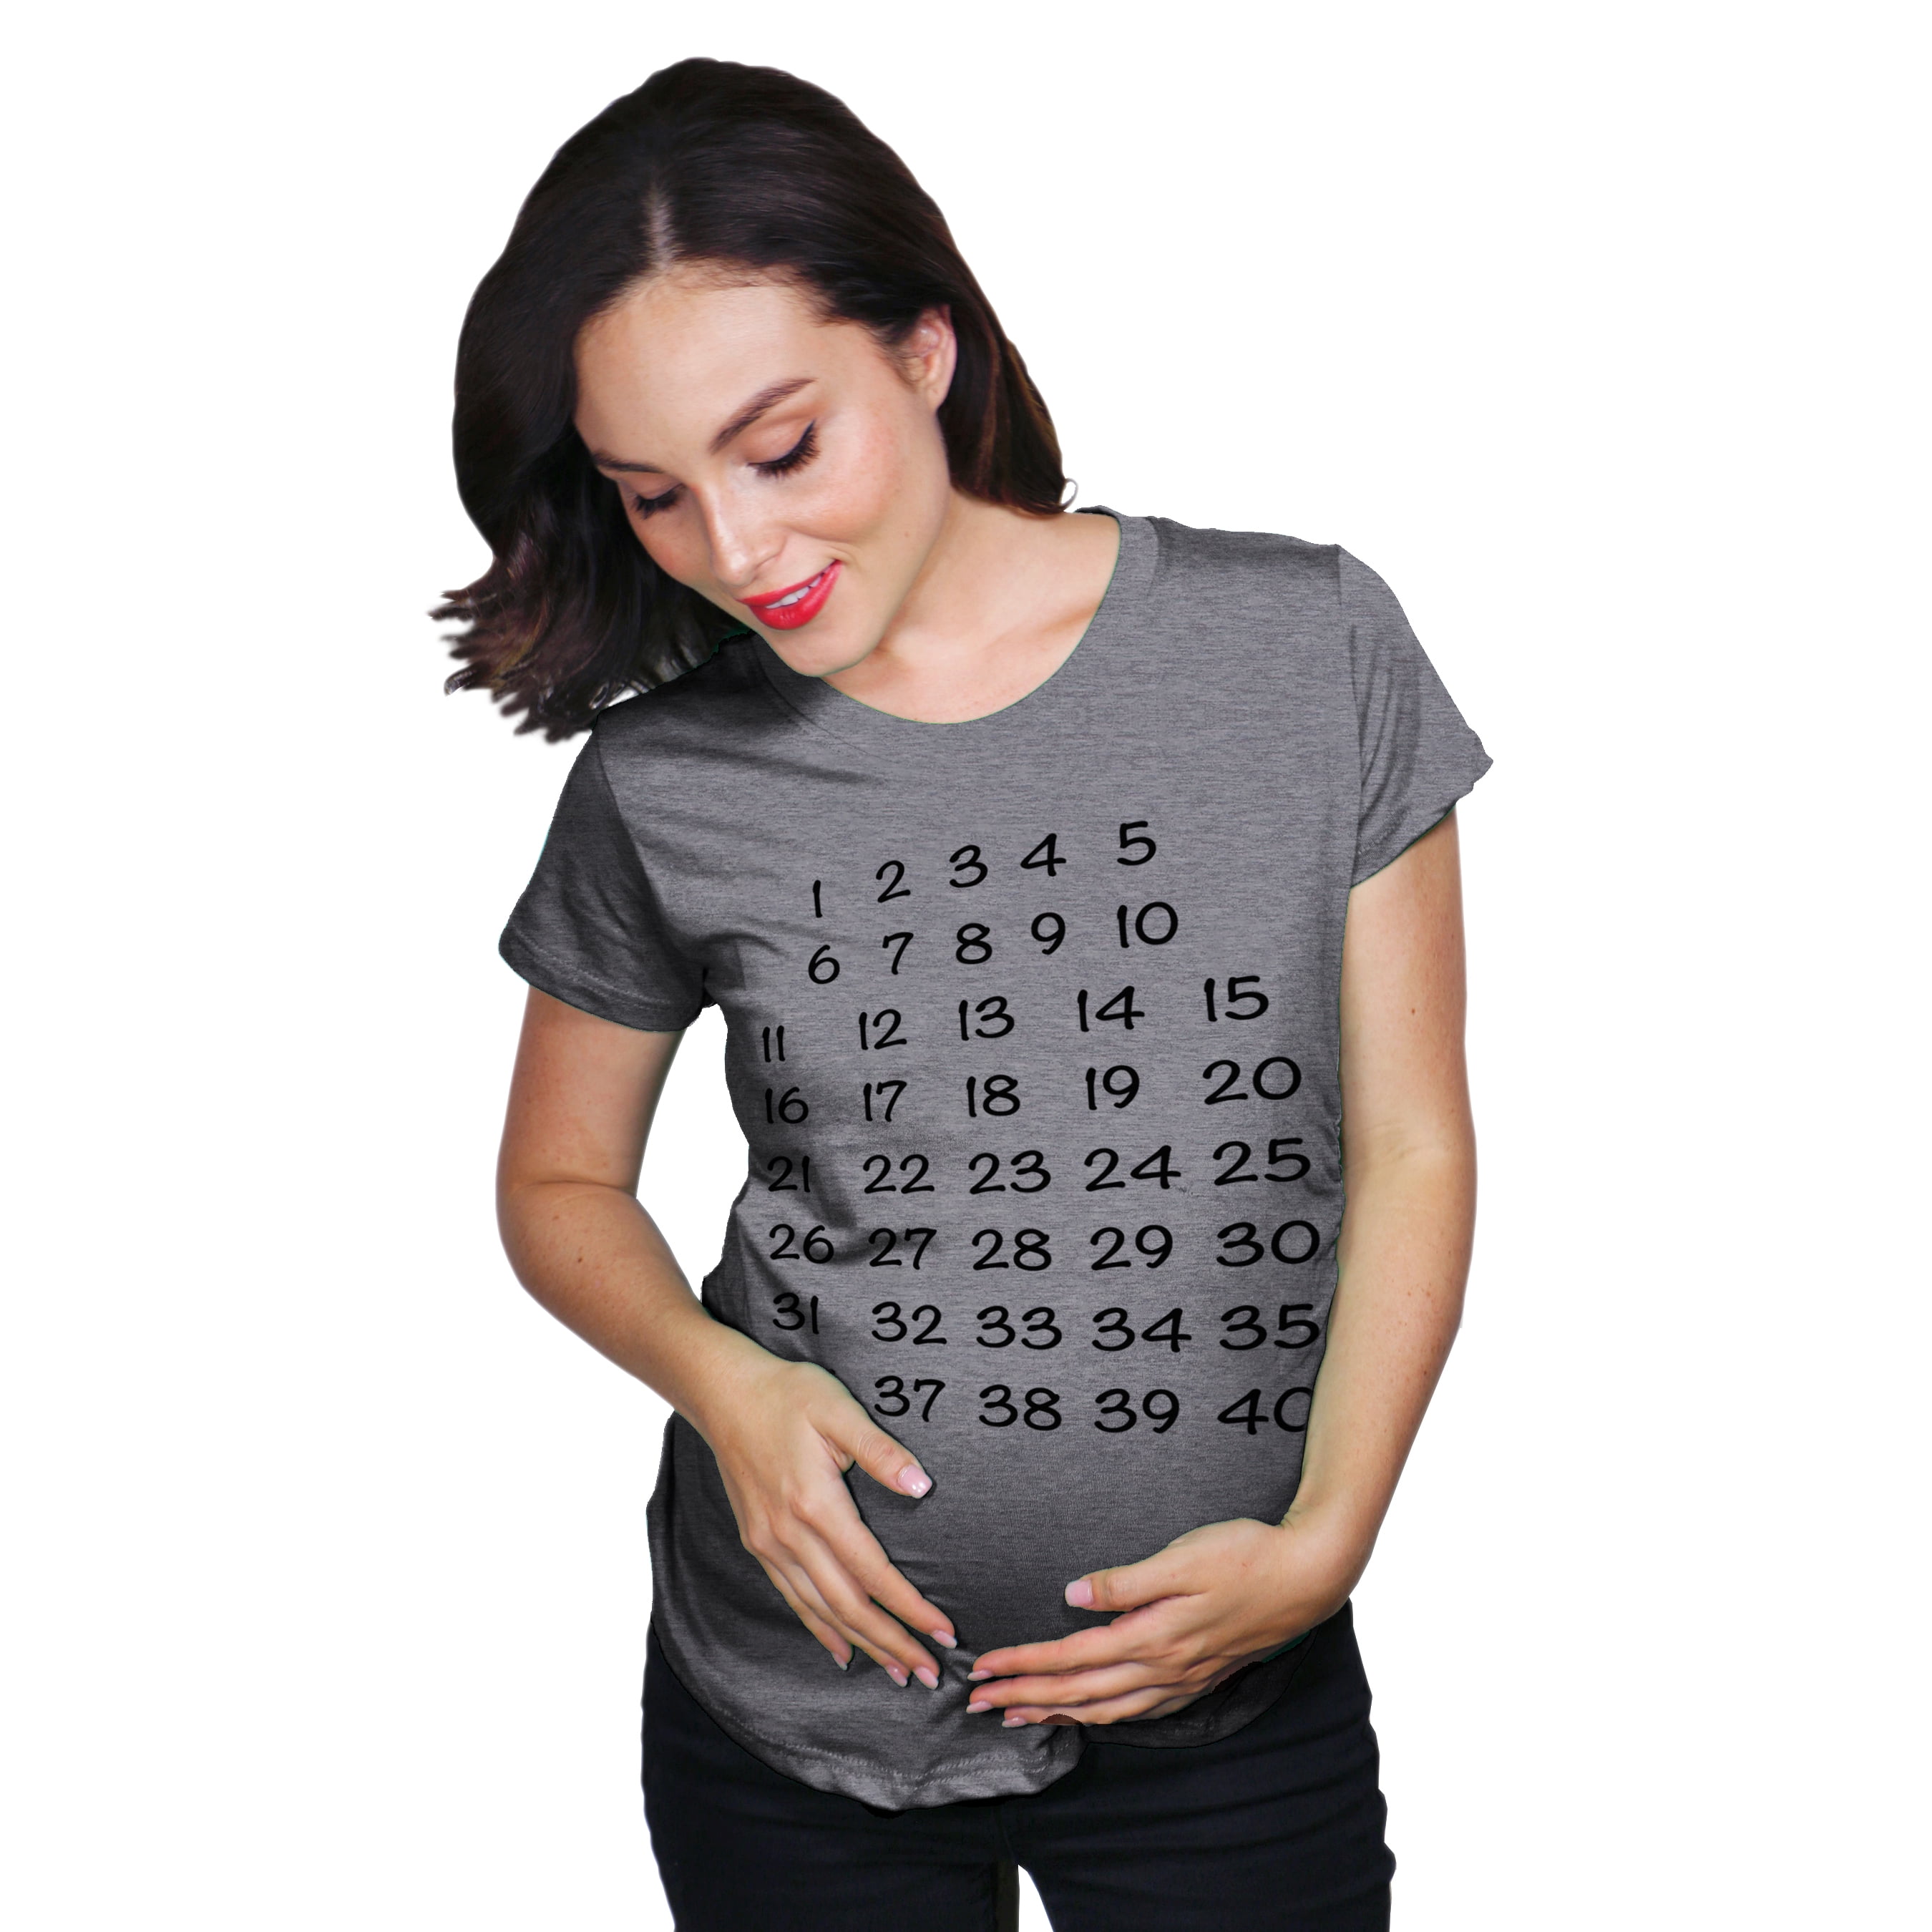 Crazy Dog T-Shirts Maternity Raglan The Baby Made Me Eat It Funny Pregnancy Baseball Tee